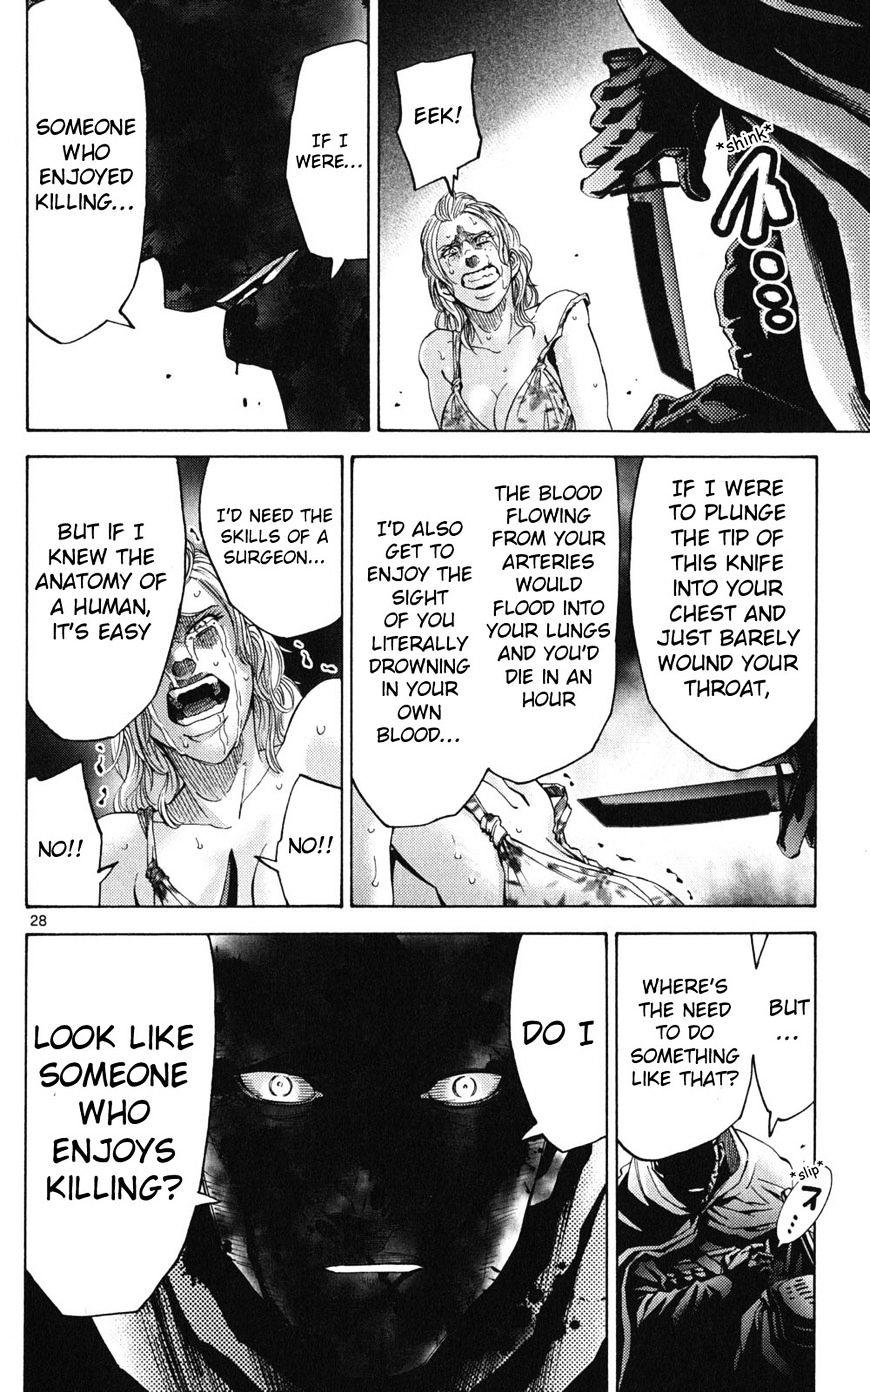 Imawa No Kuni No Alice Chapter 49.1 : Side Story 5 - King Of Spades (1) page 26 - Mangakakalot